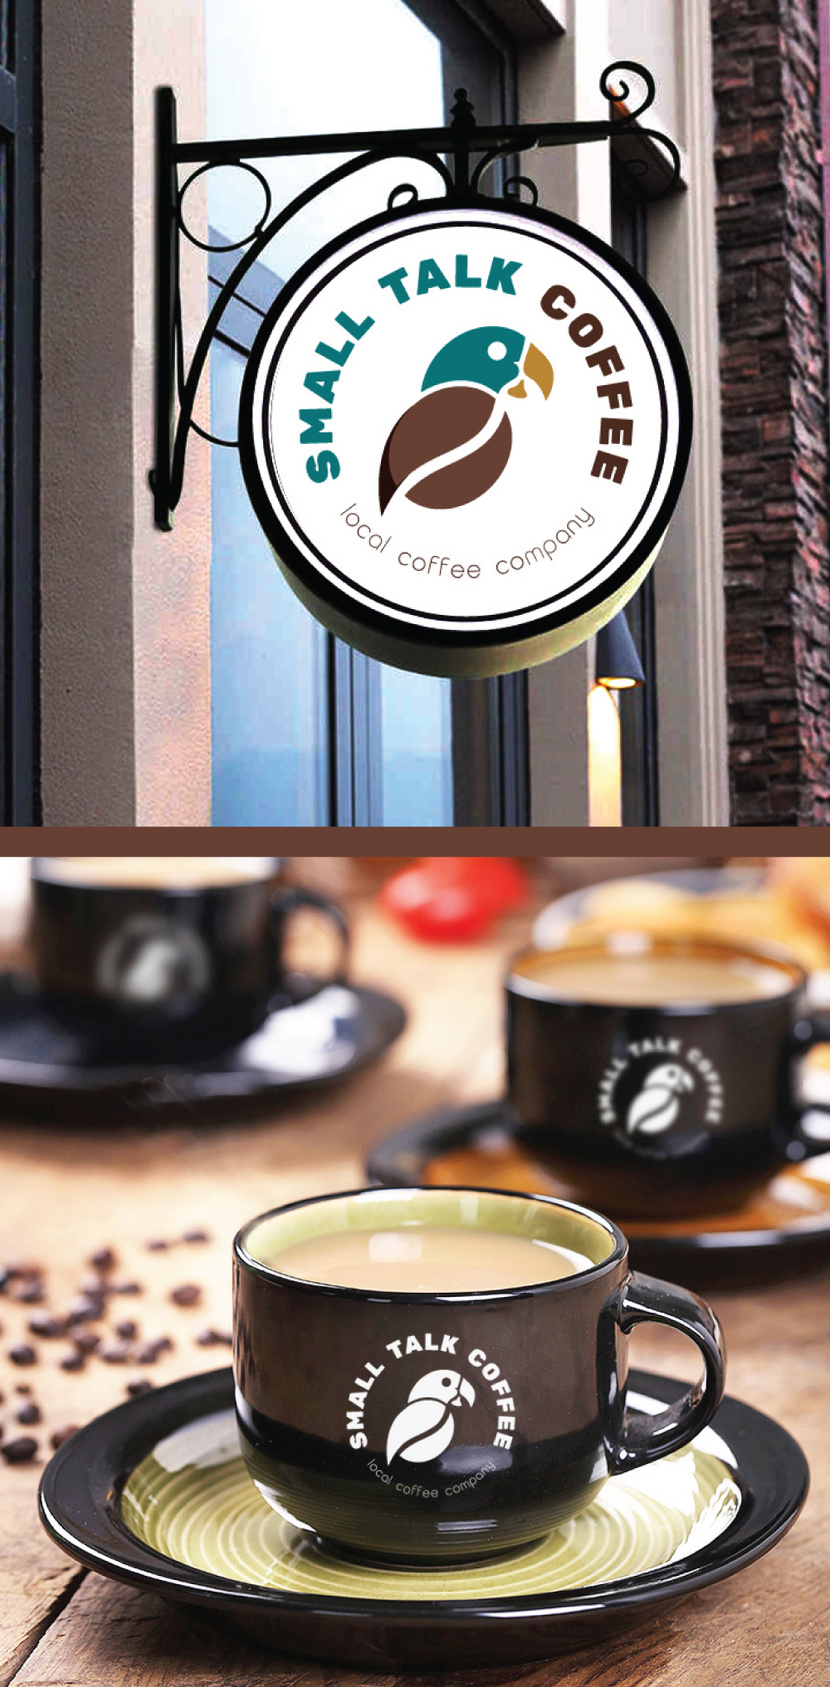 SMALL TALK COFFEE - Лого и фирменный стиль для кофейни